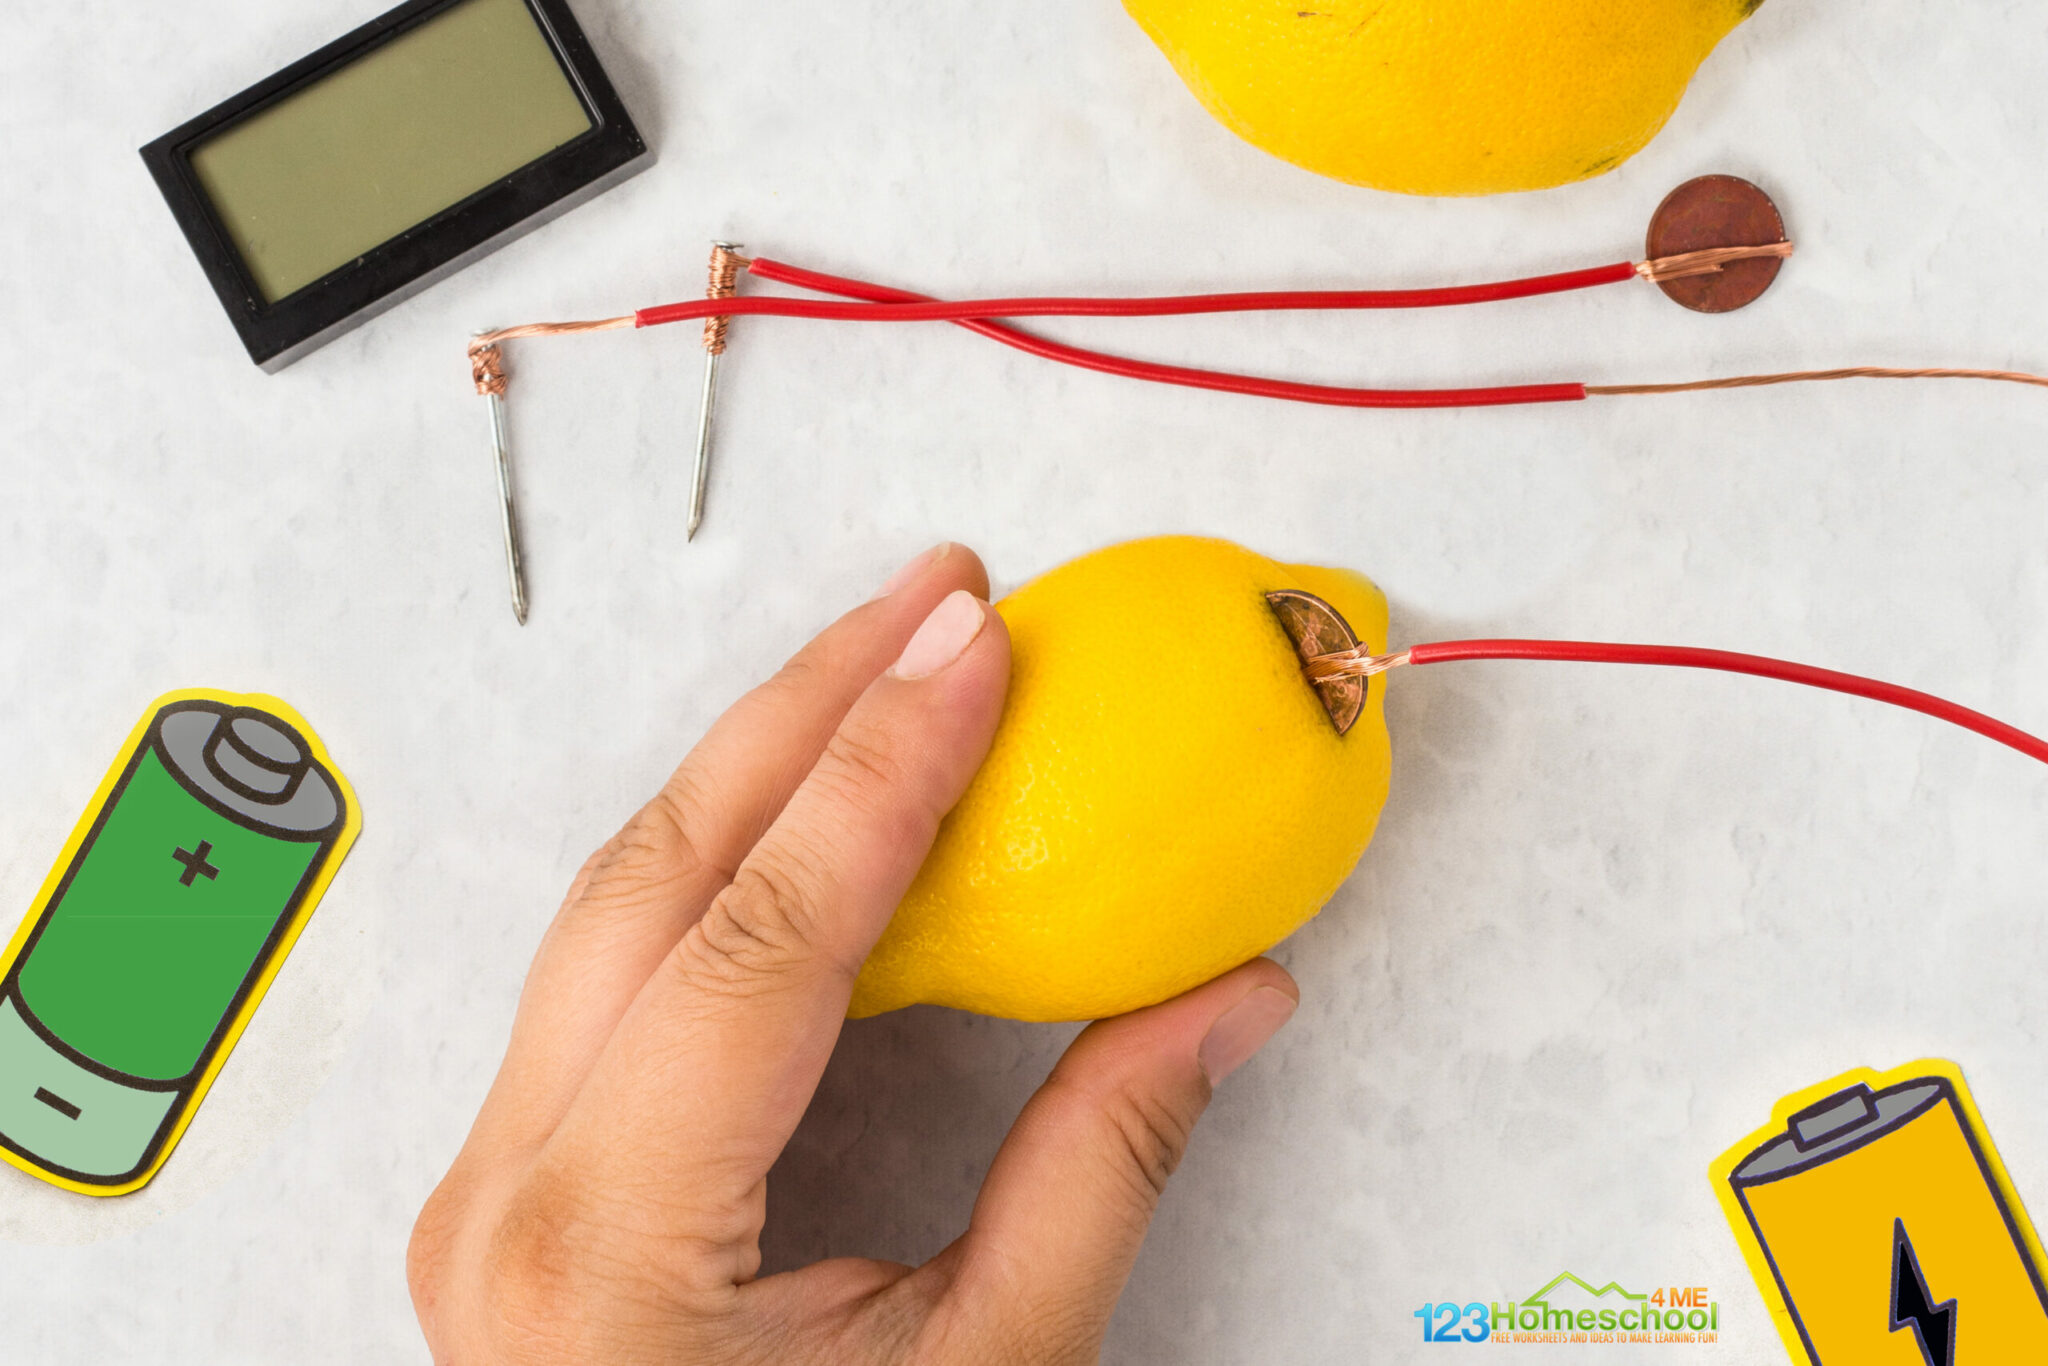 how do fruit powered clocks work using lemons and oranges as batteries